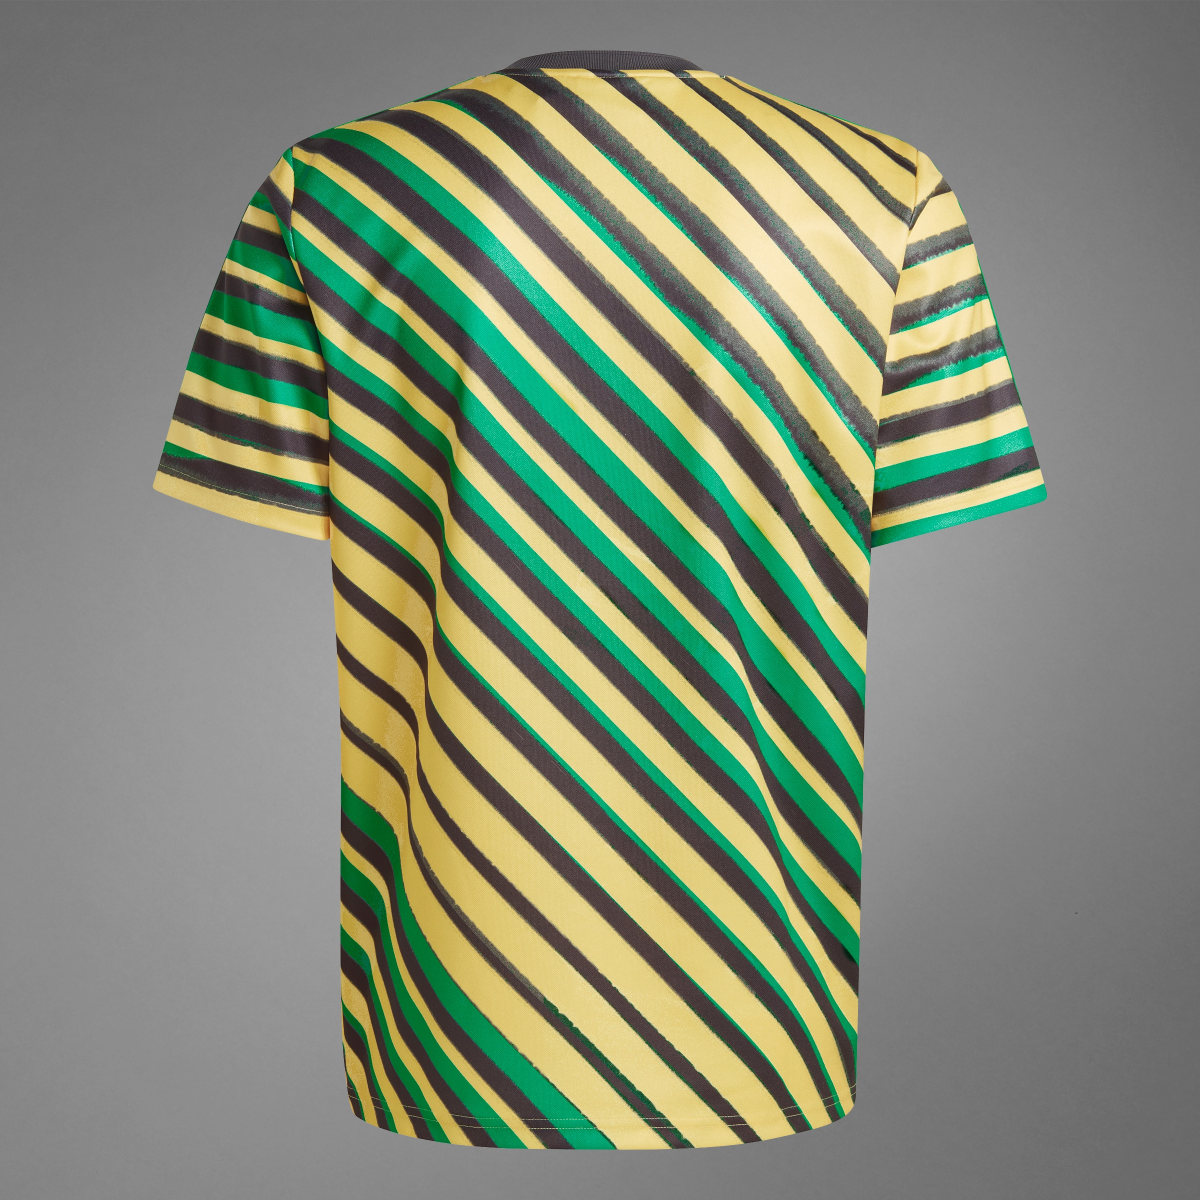 Adidas Koszulka Jamaica Trefoil. 11